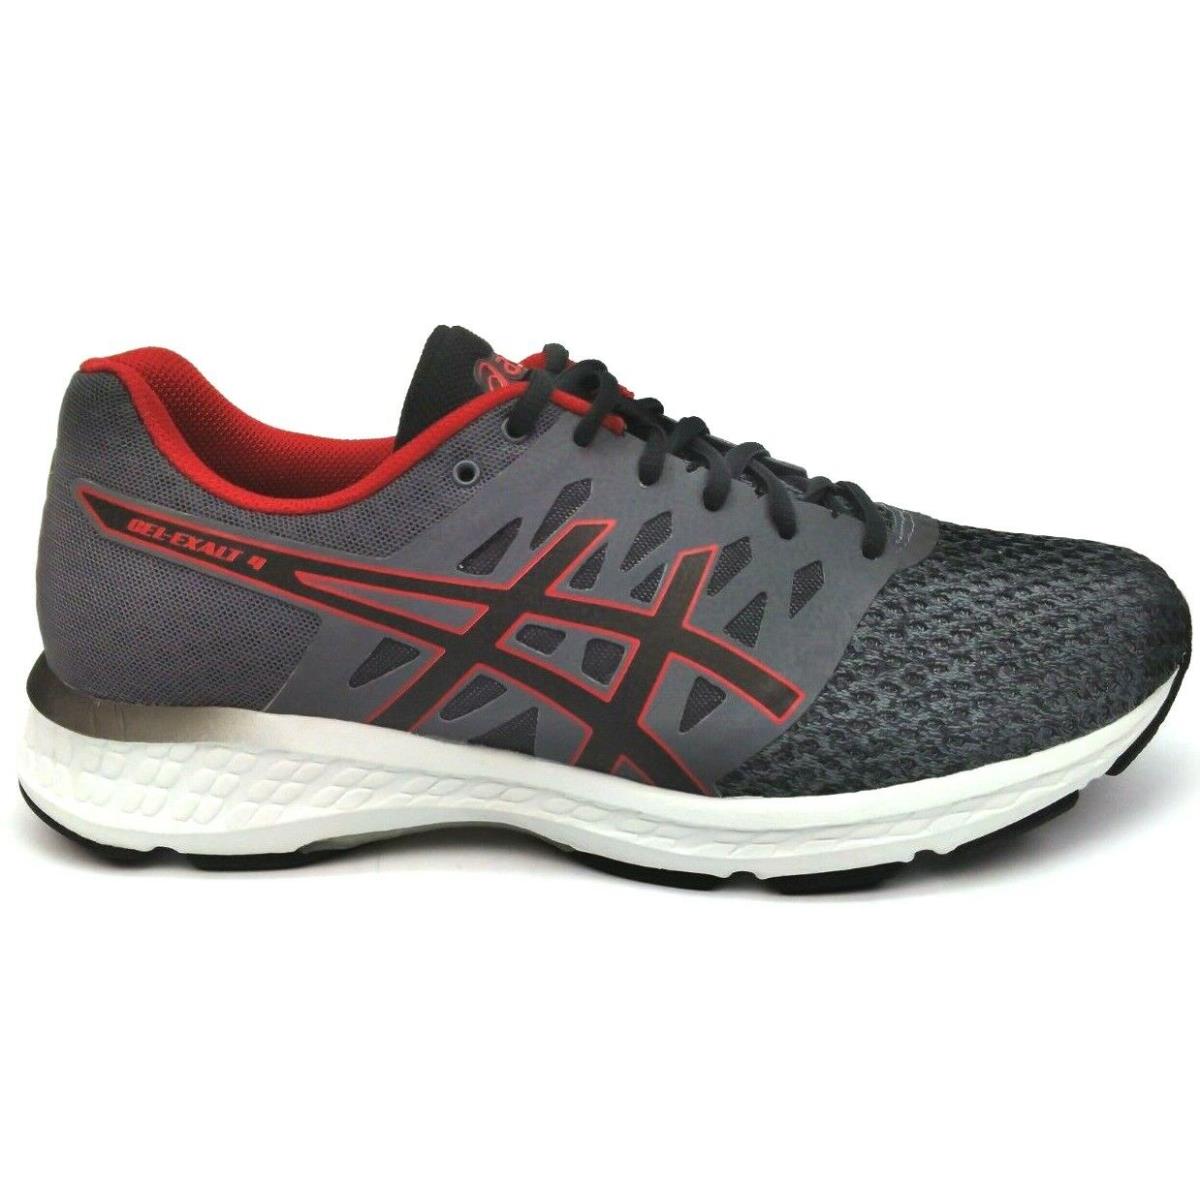 Asics Men`s Gel Exalt 4 Lightweight Running Shoes Black Red White Grey Size 8